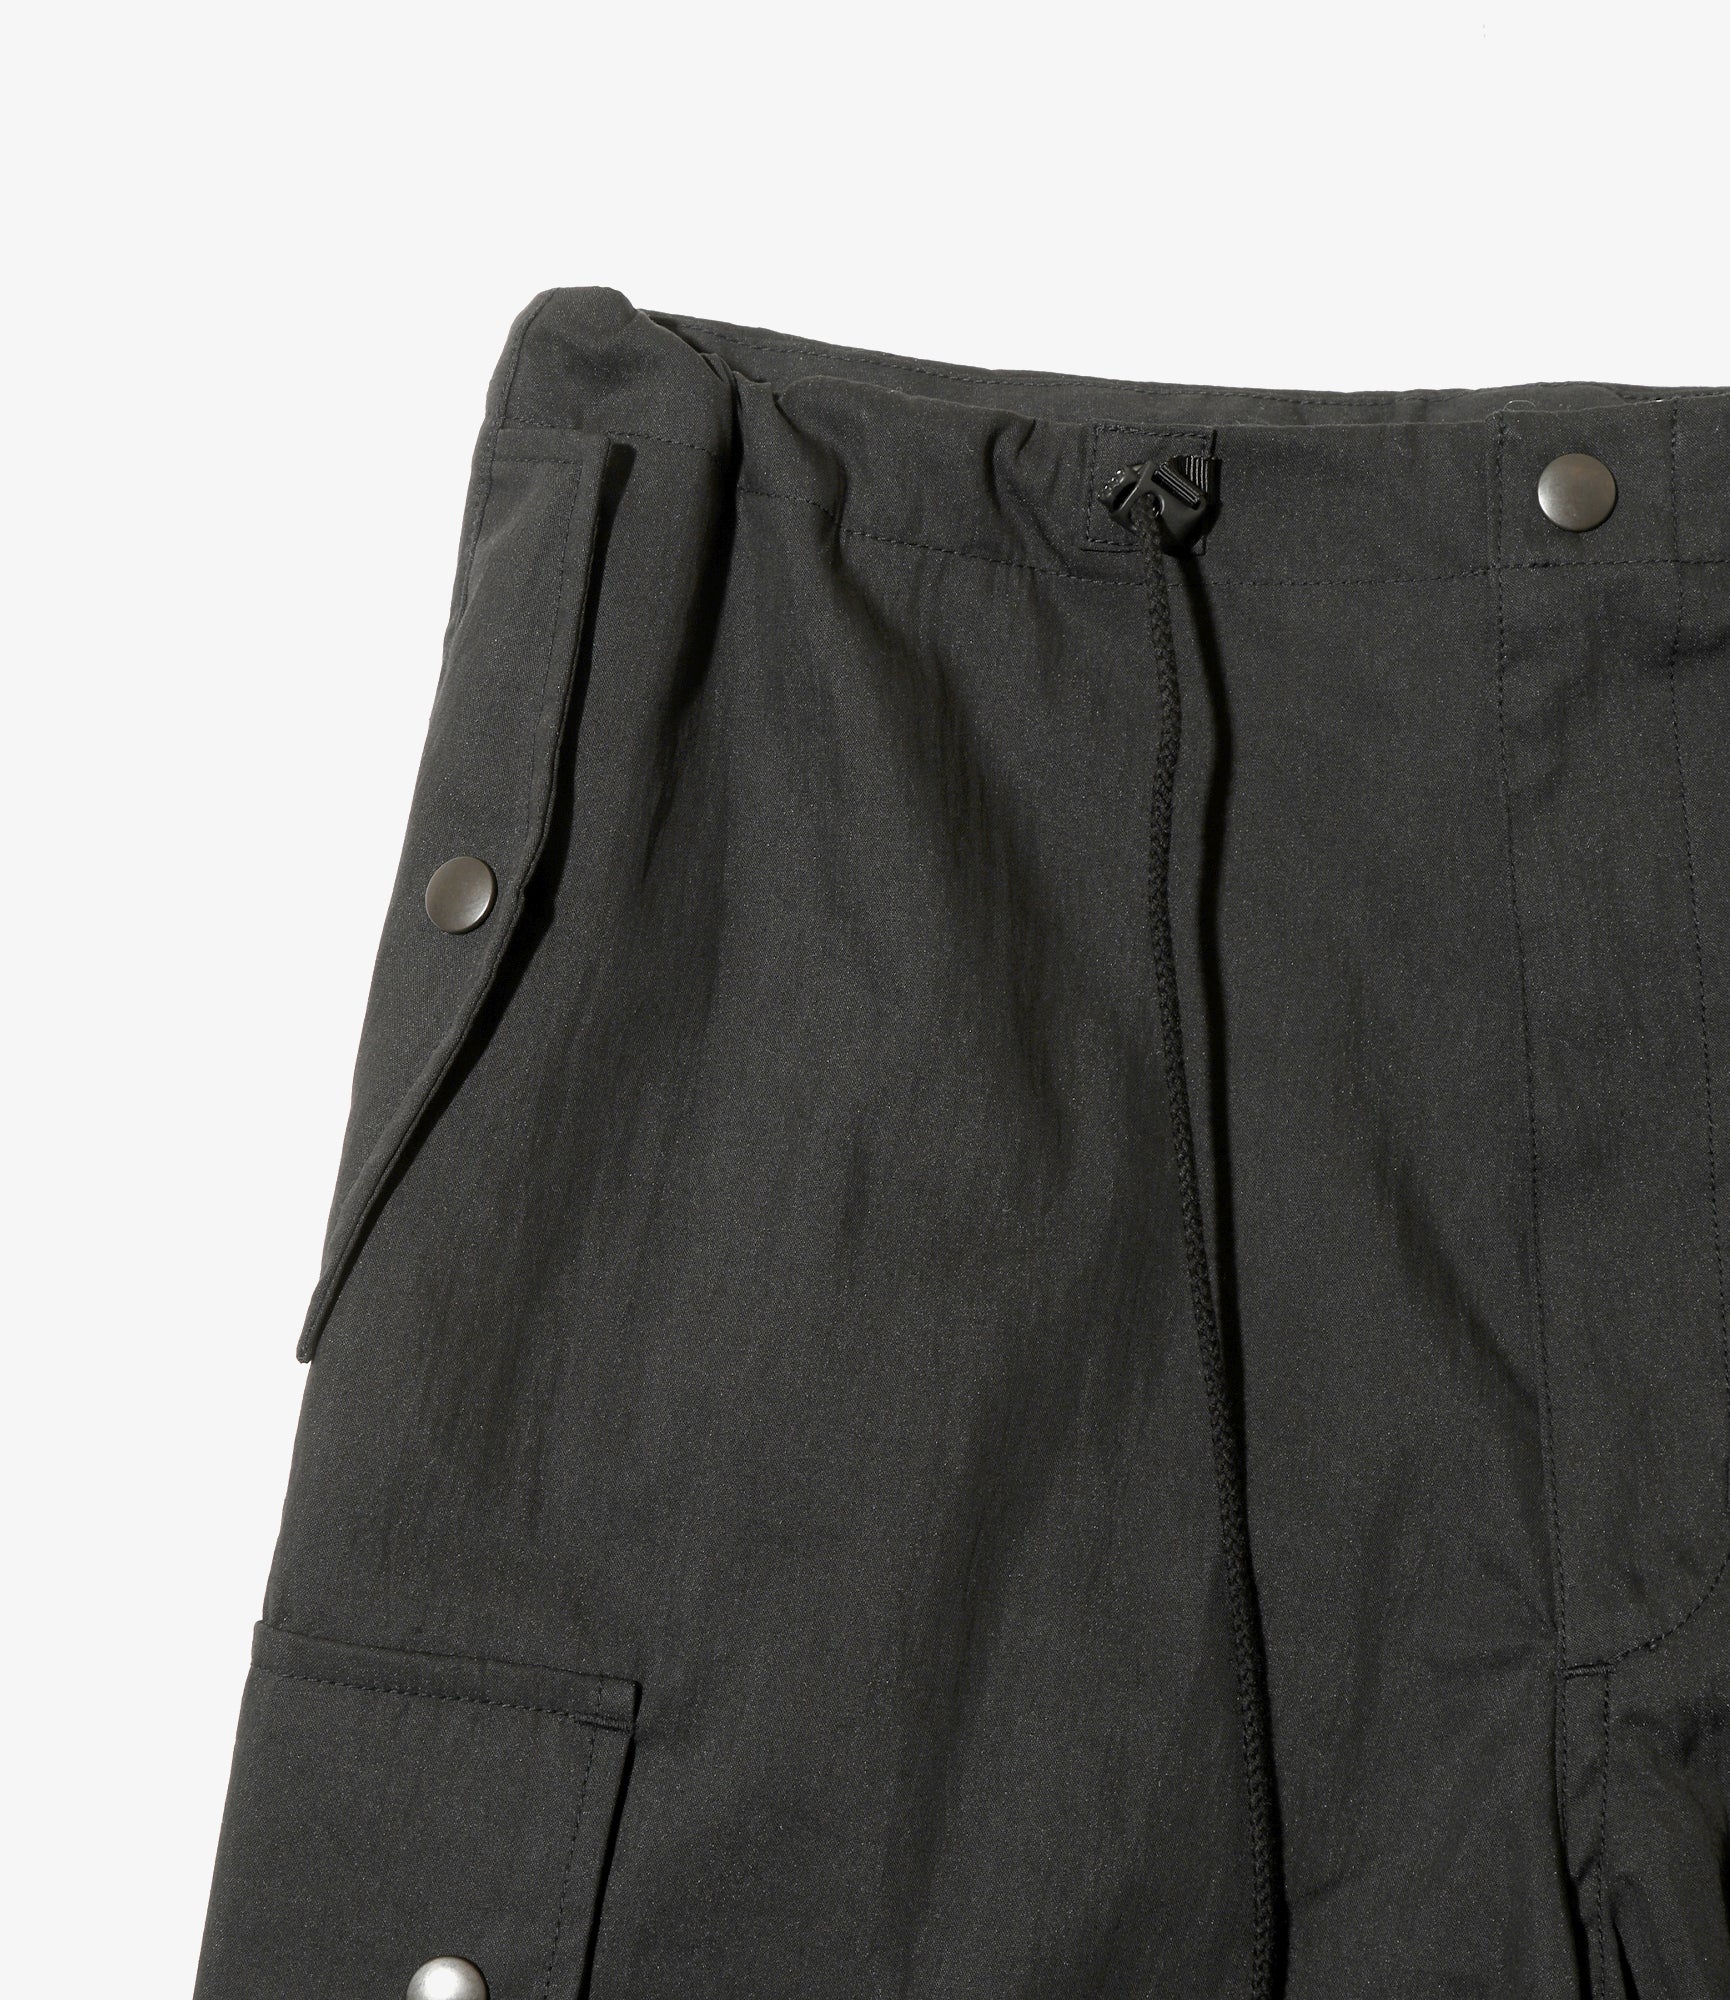 Needles Field Pant - C/N Oxford Cloth - Black